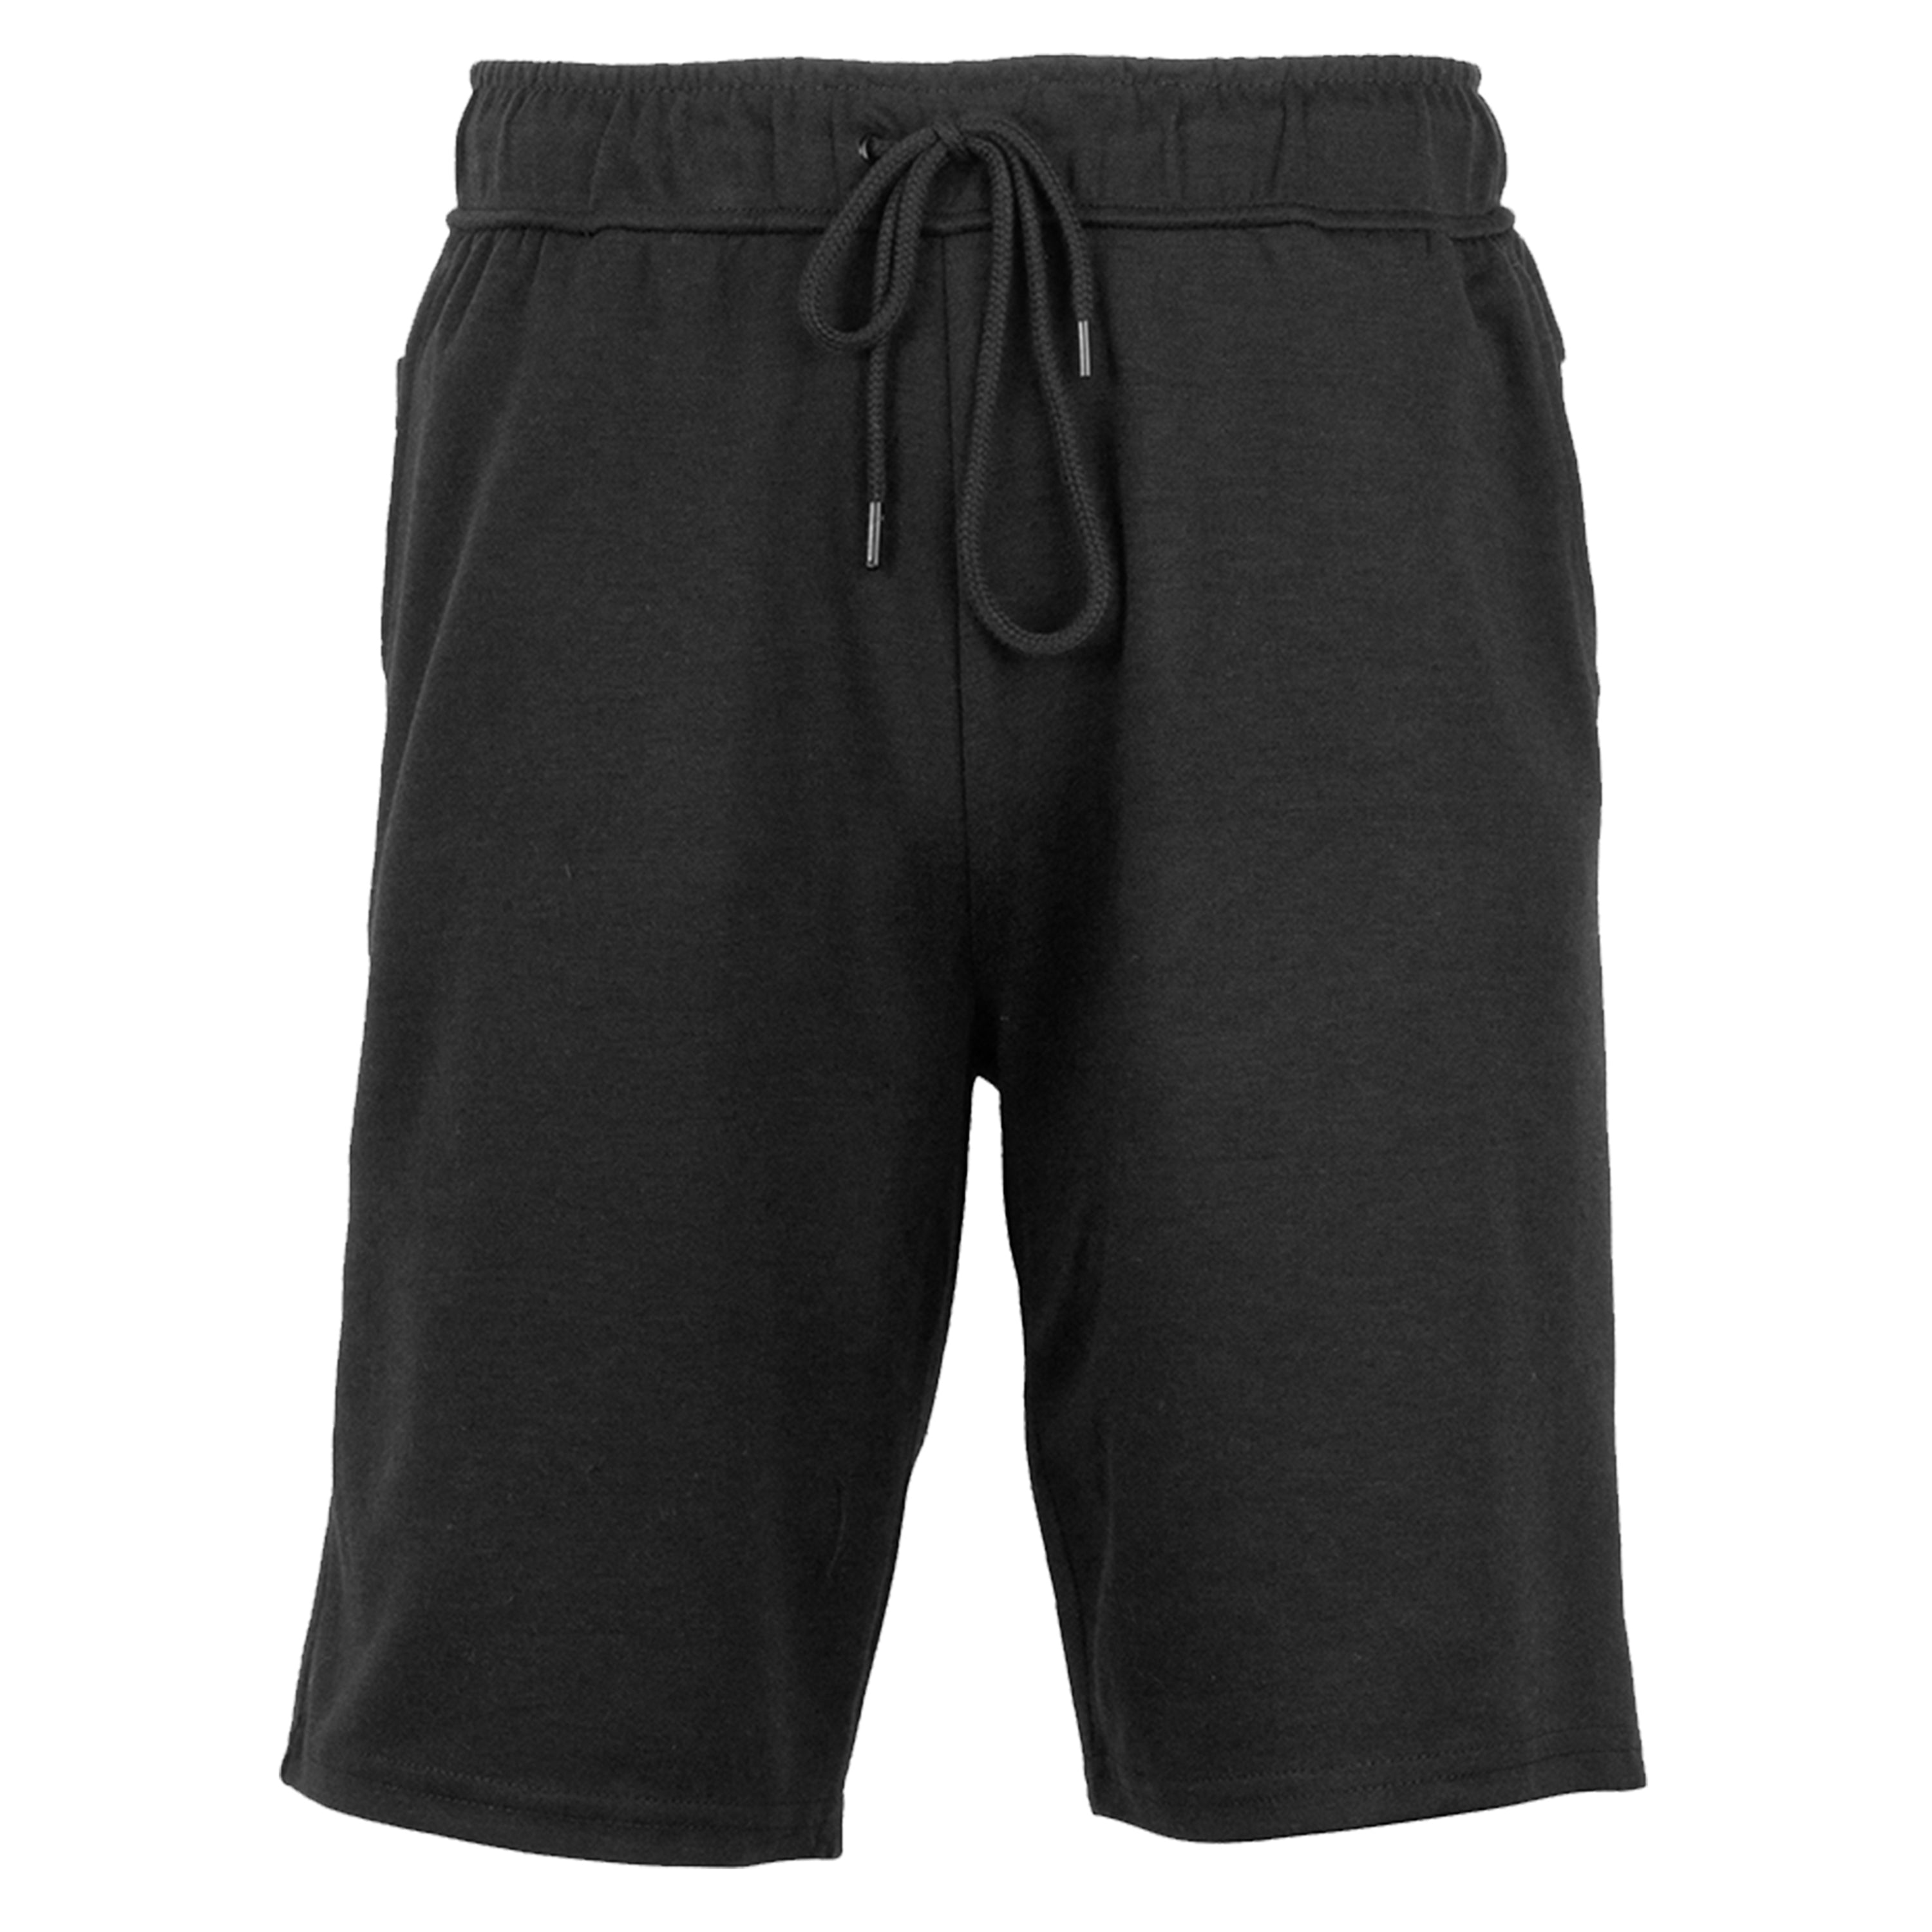 Men's Tech Fleece Shorts with Zipper Side Pocket